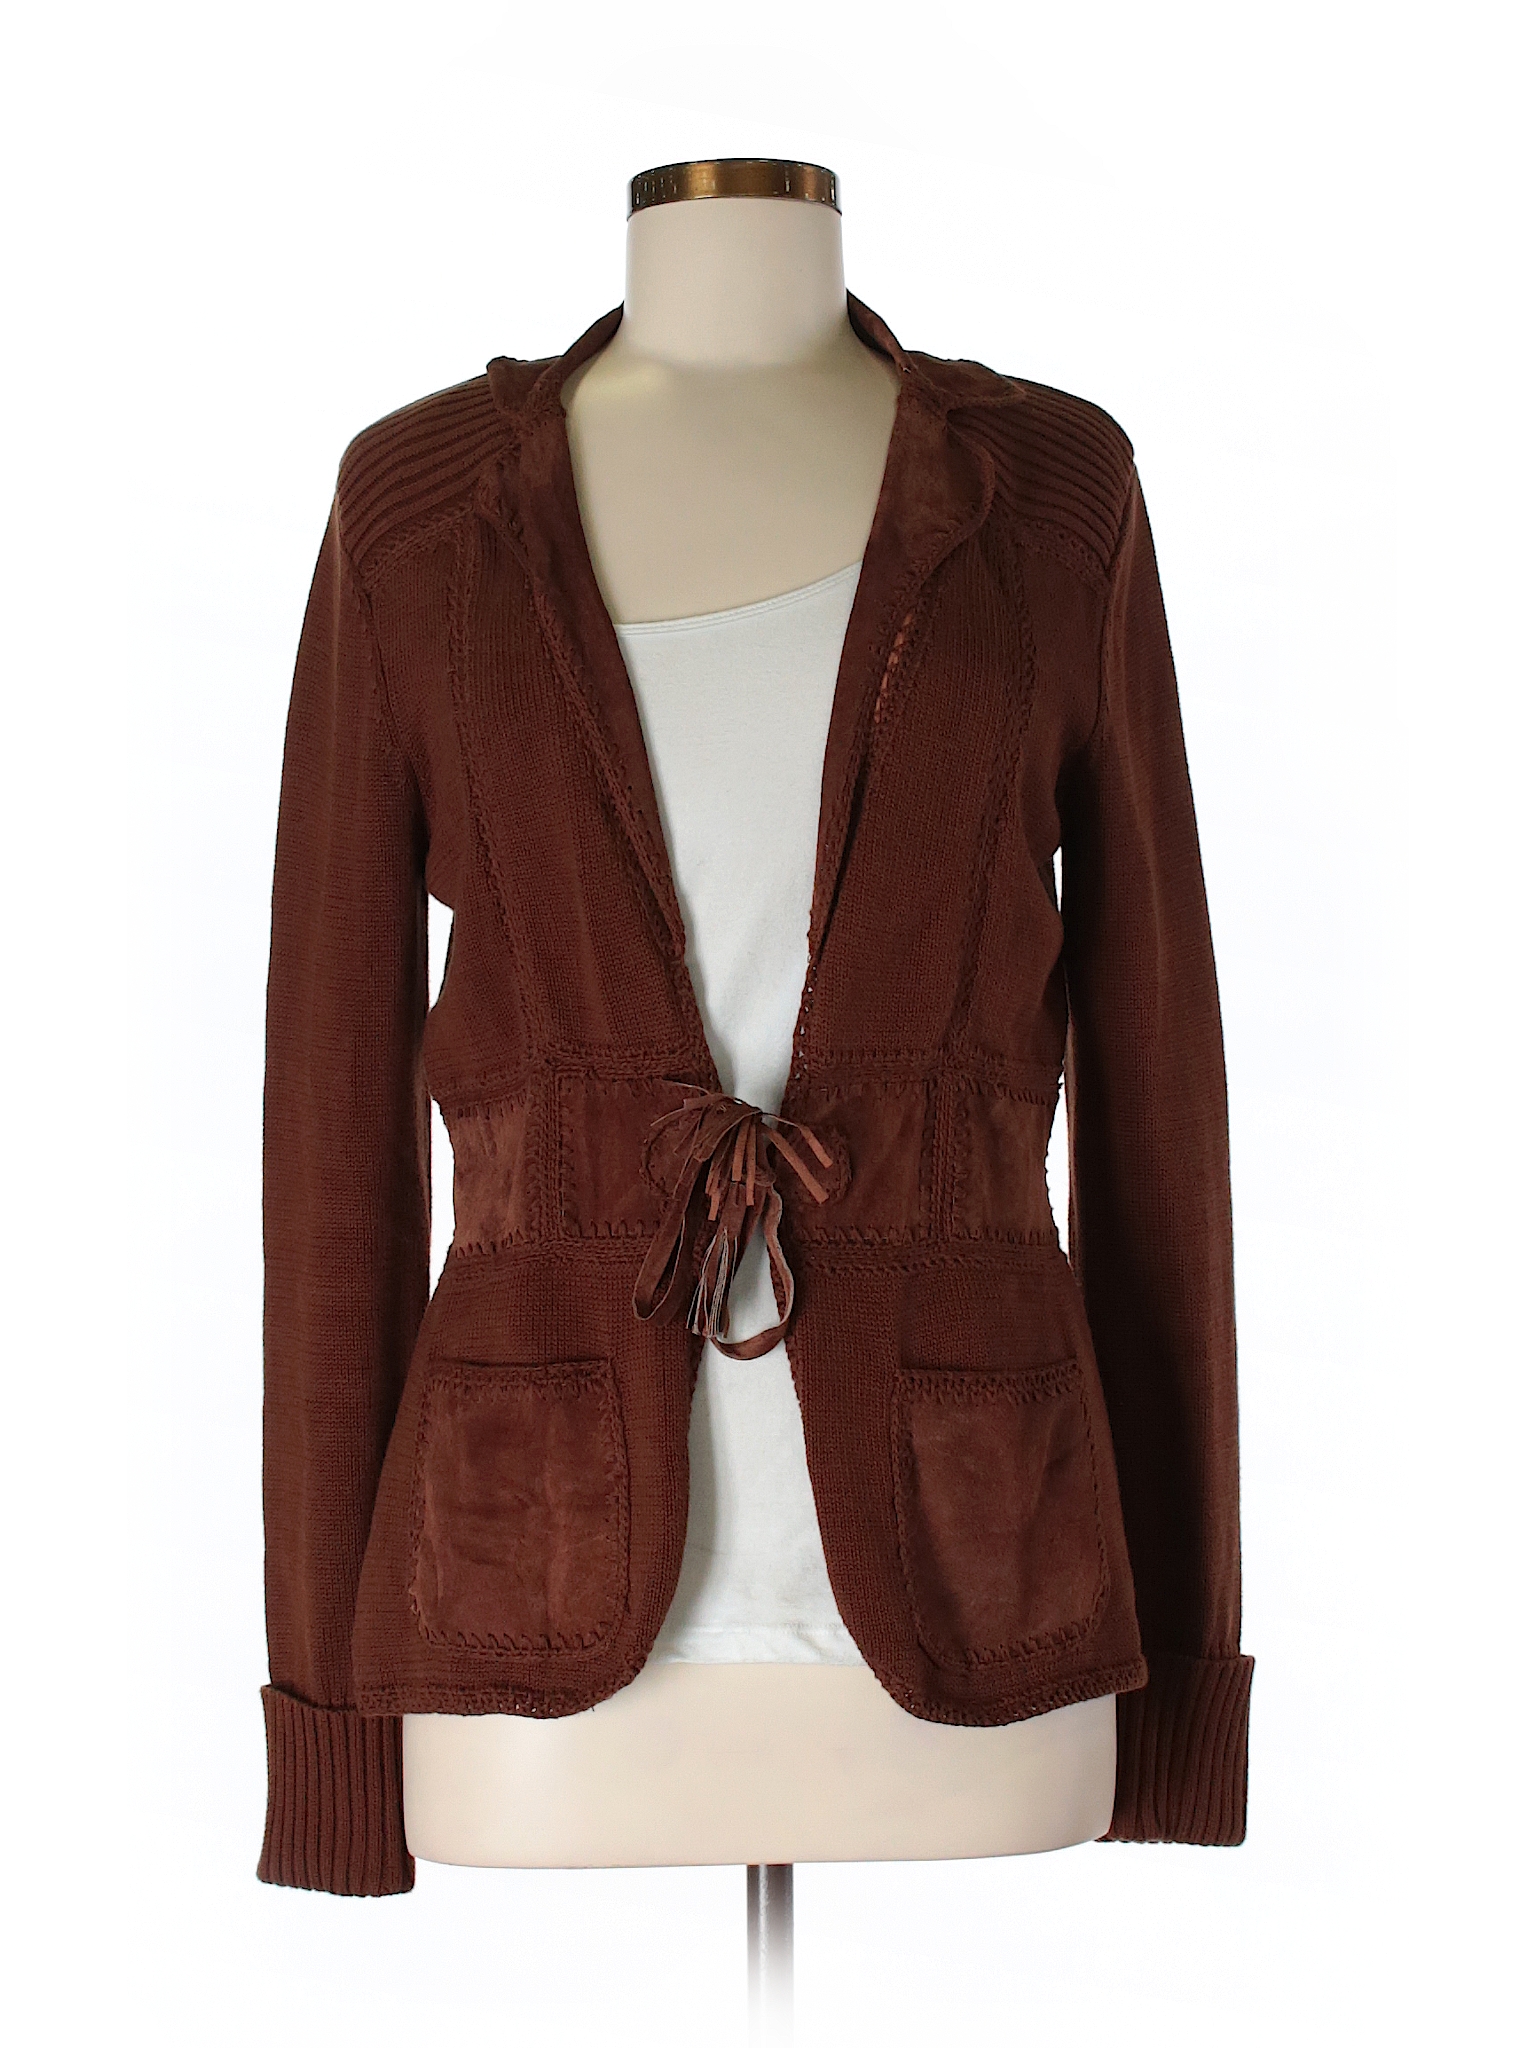 Nanette Lepore 100% Cotton Solid Brown Cardigan Size M - 93% off | thredUP